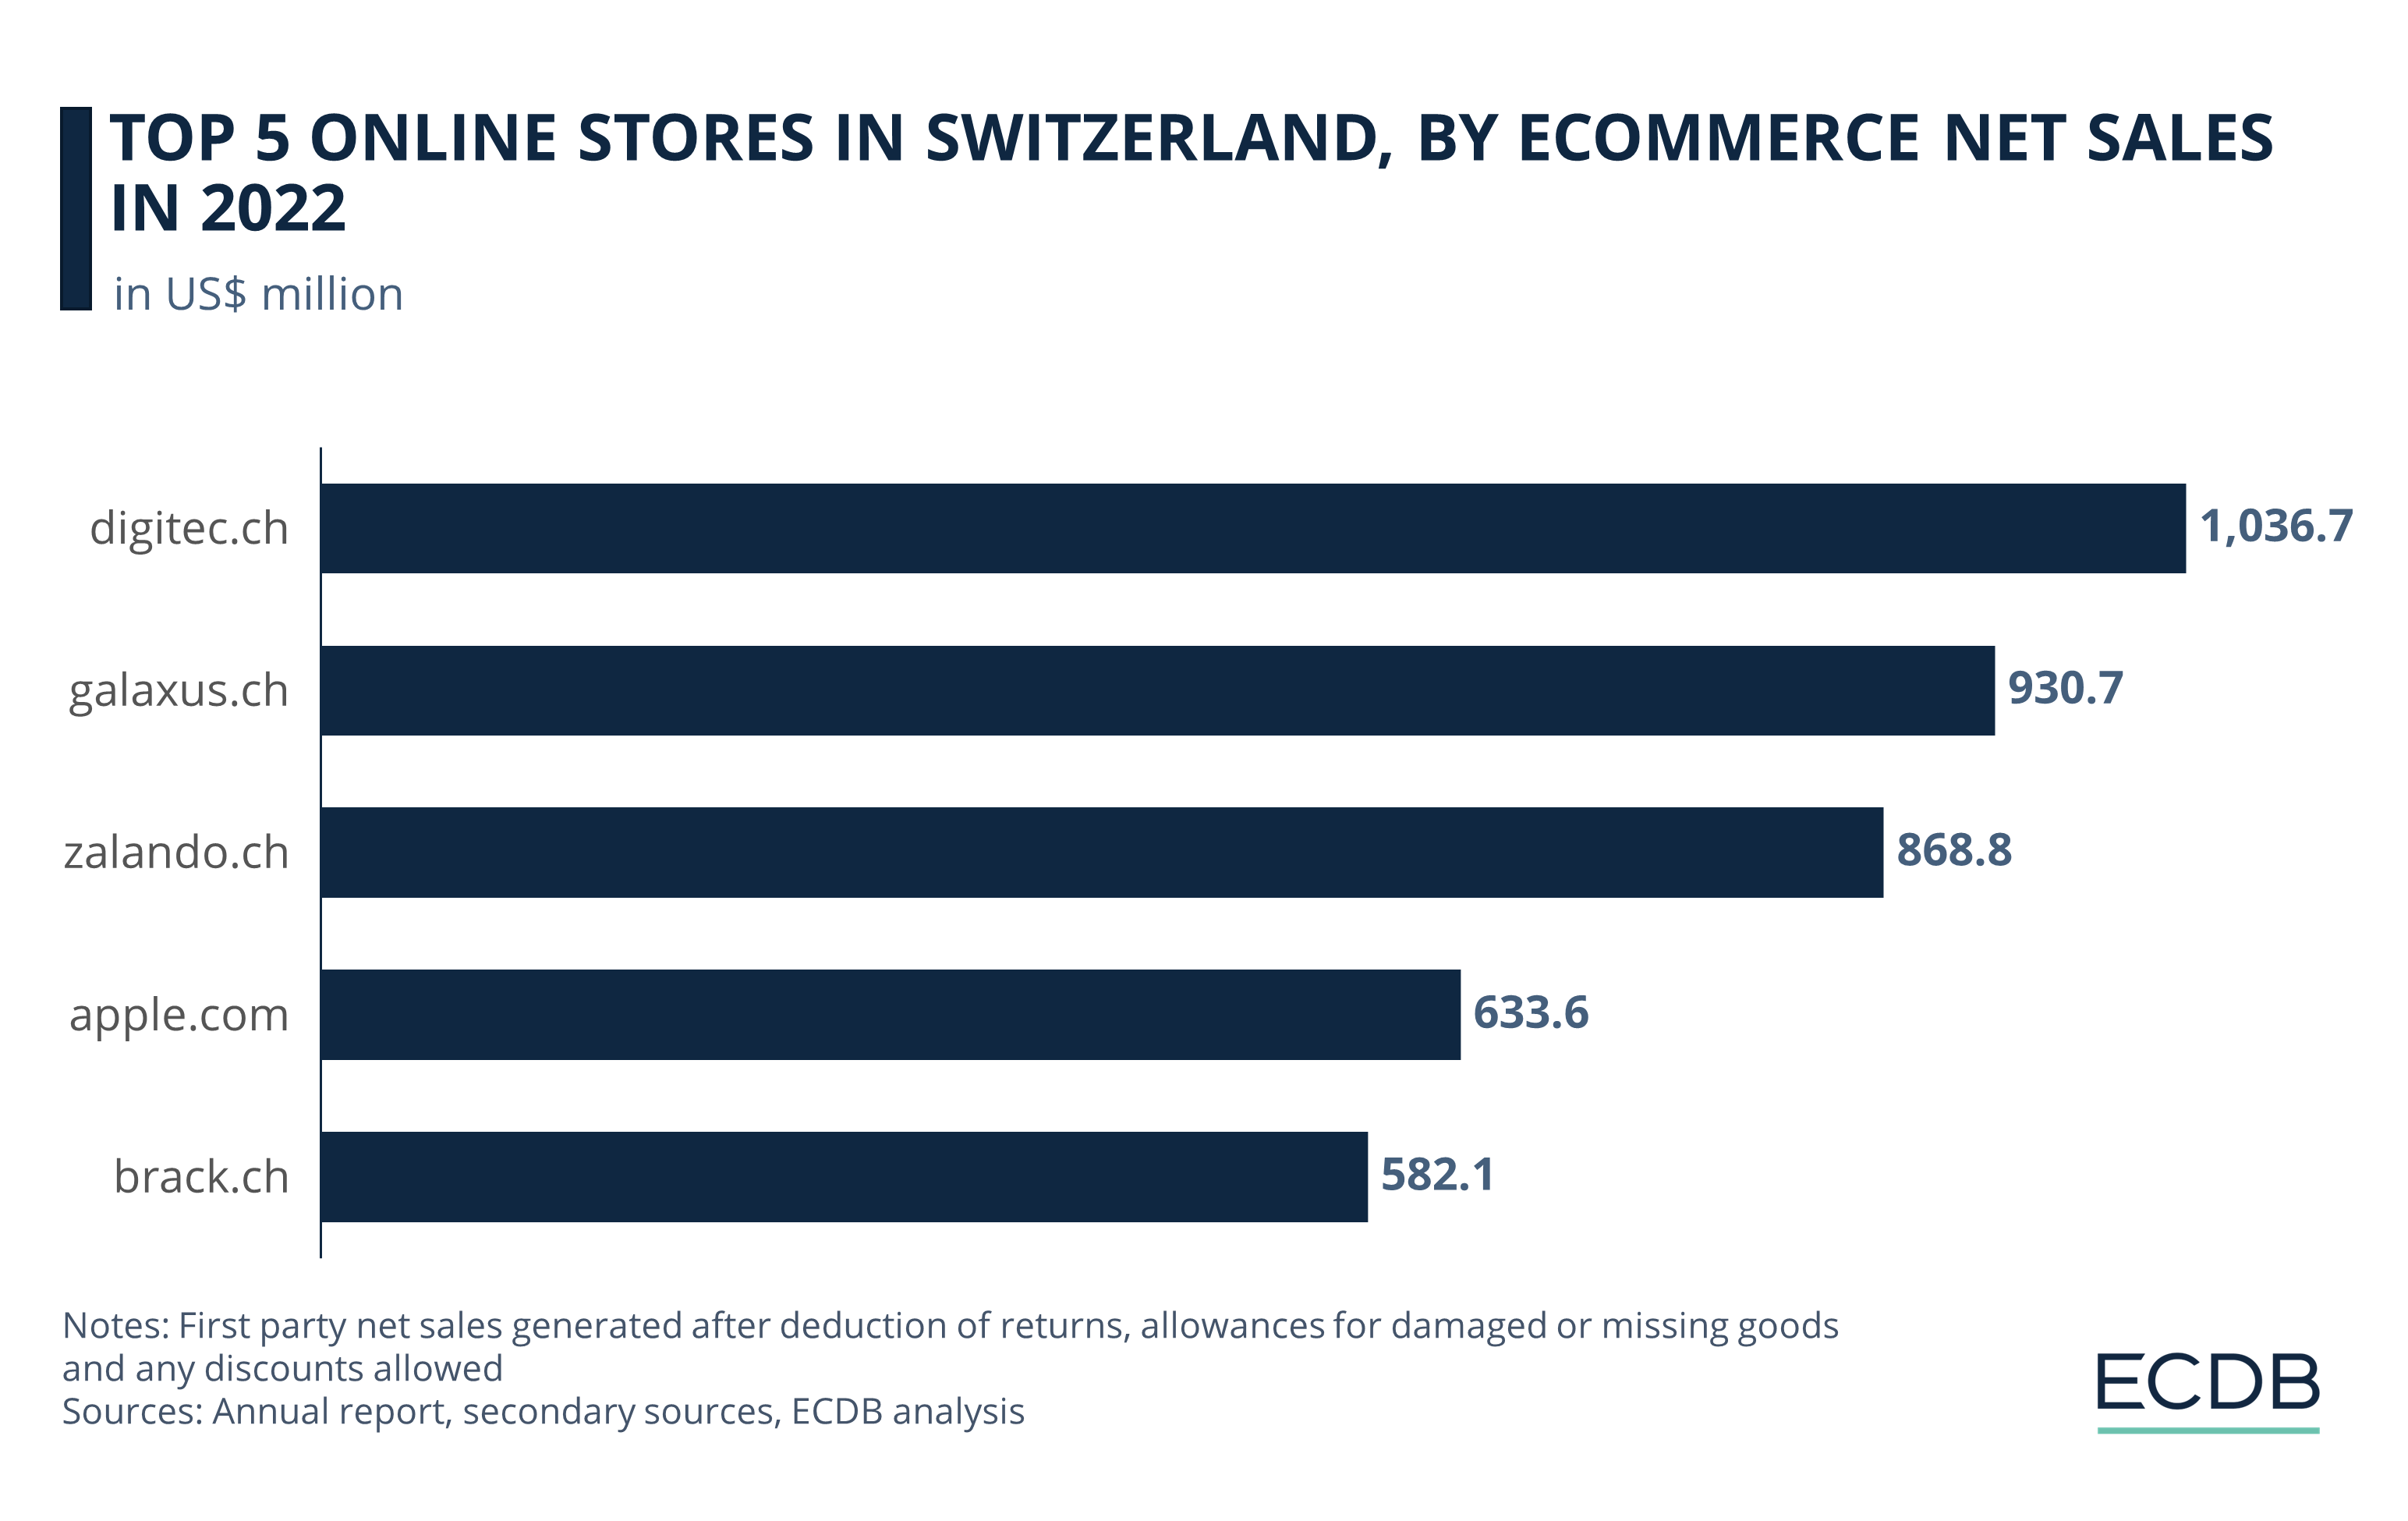 Top 5 Online Stores in Switzerland by eCommerce Net Sales, 2022